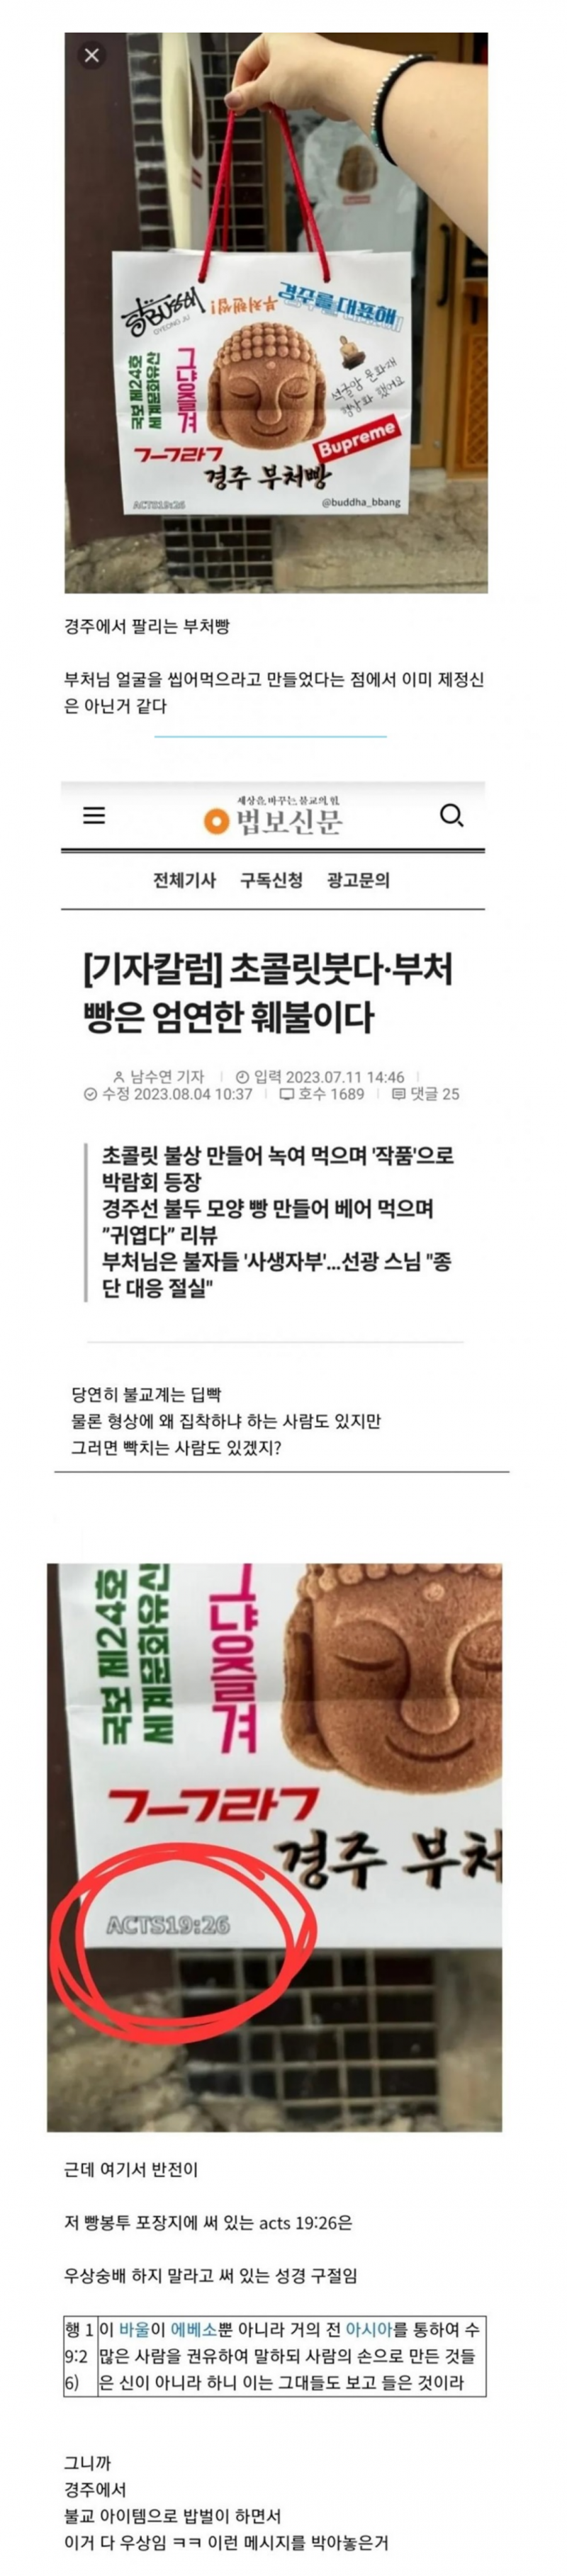 nokbeon.net-부처빵 근황-1번 이미지